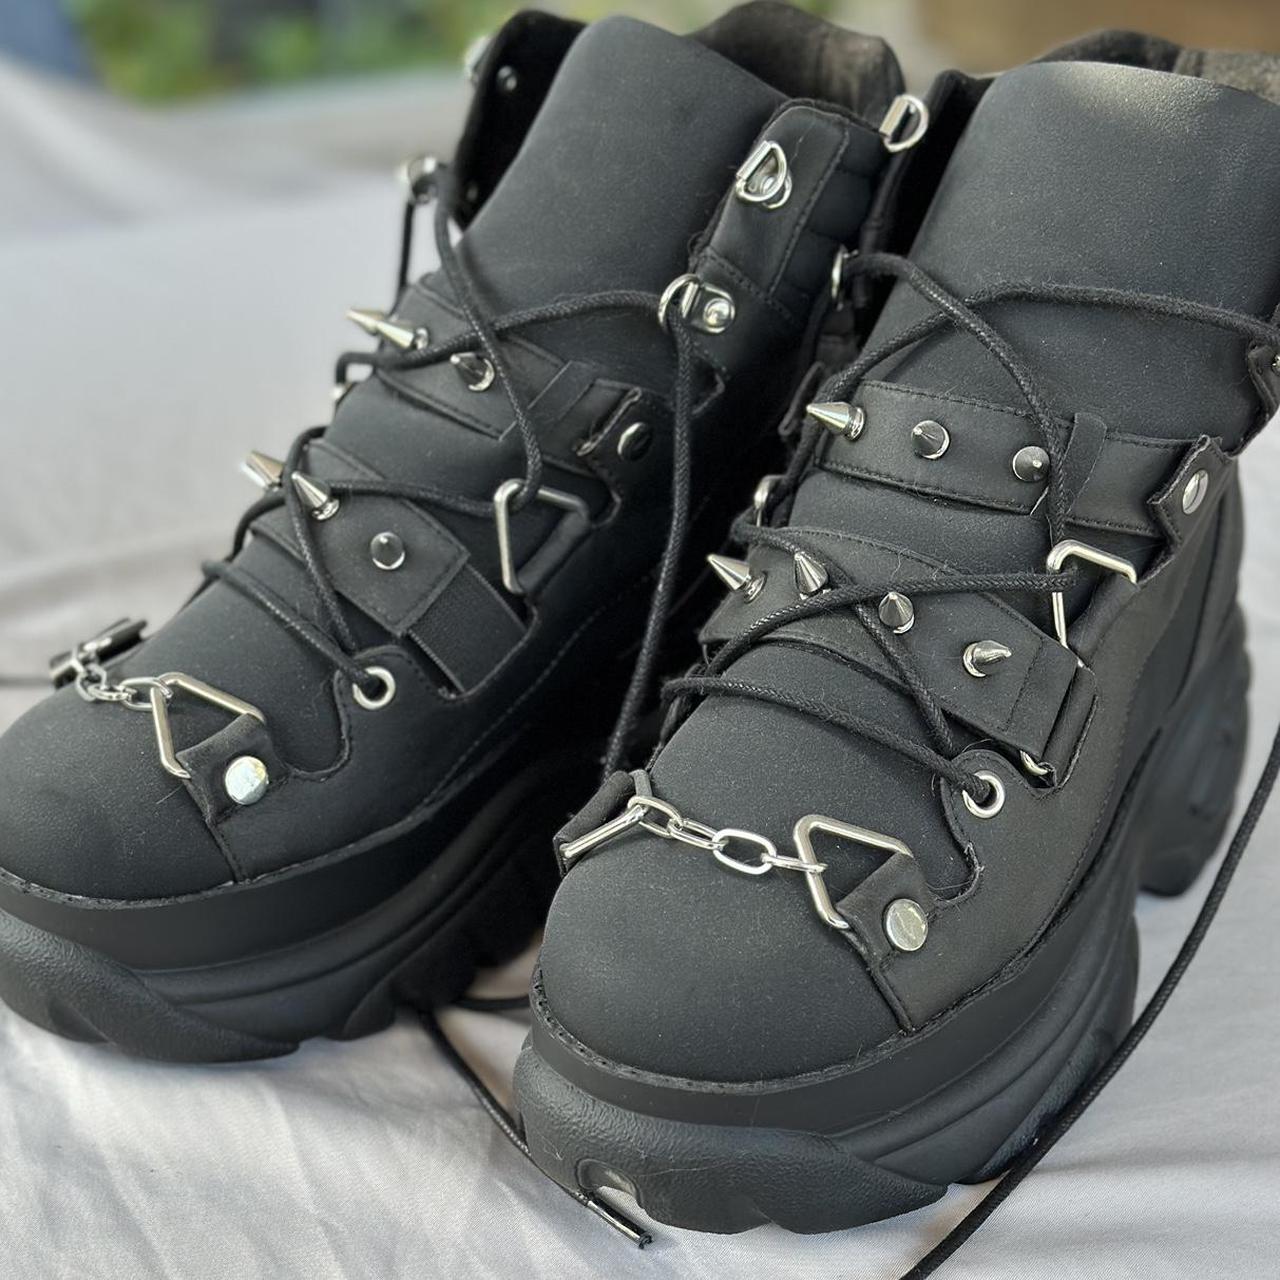 Disturbia Mary Chain platform boots Uk size 6 BRAND NEW | eBay